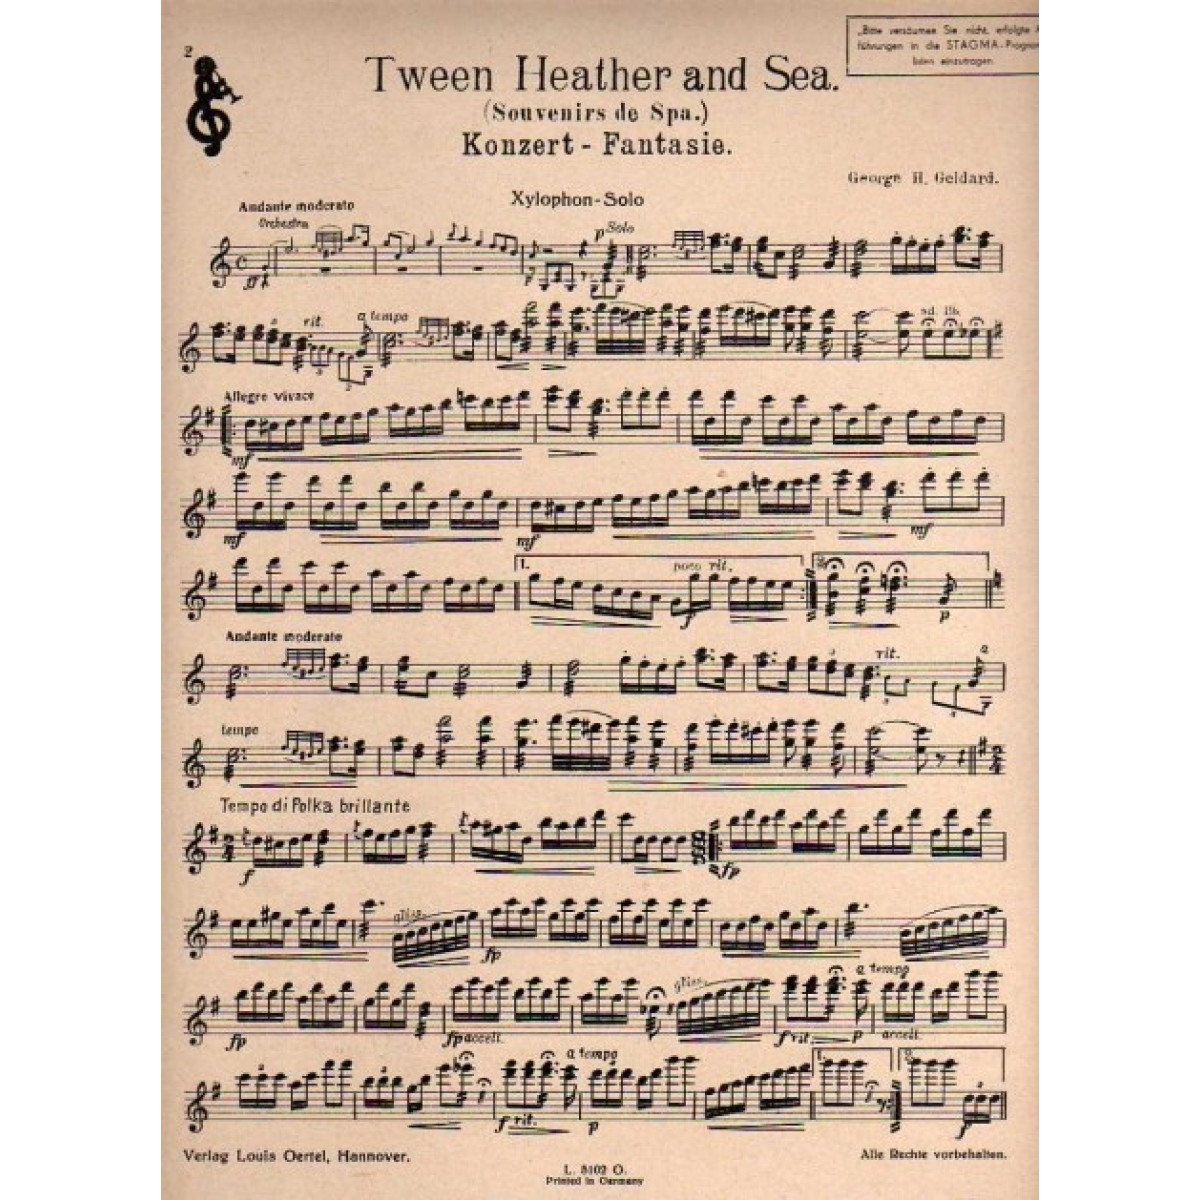 Tween Heather and Sea